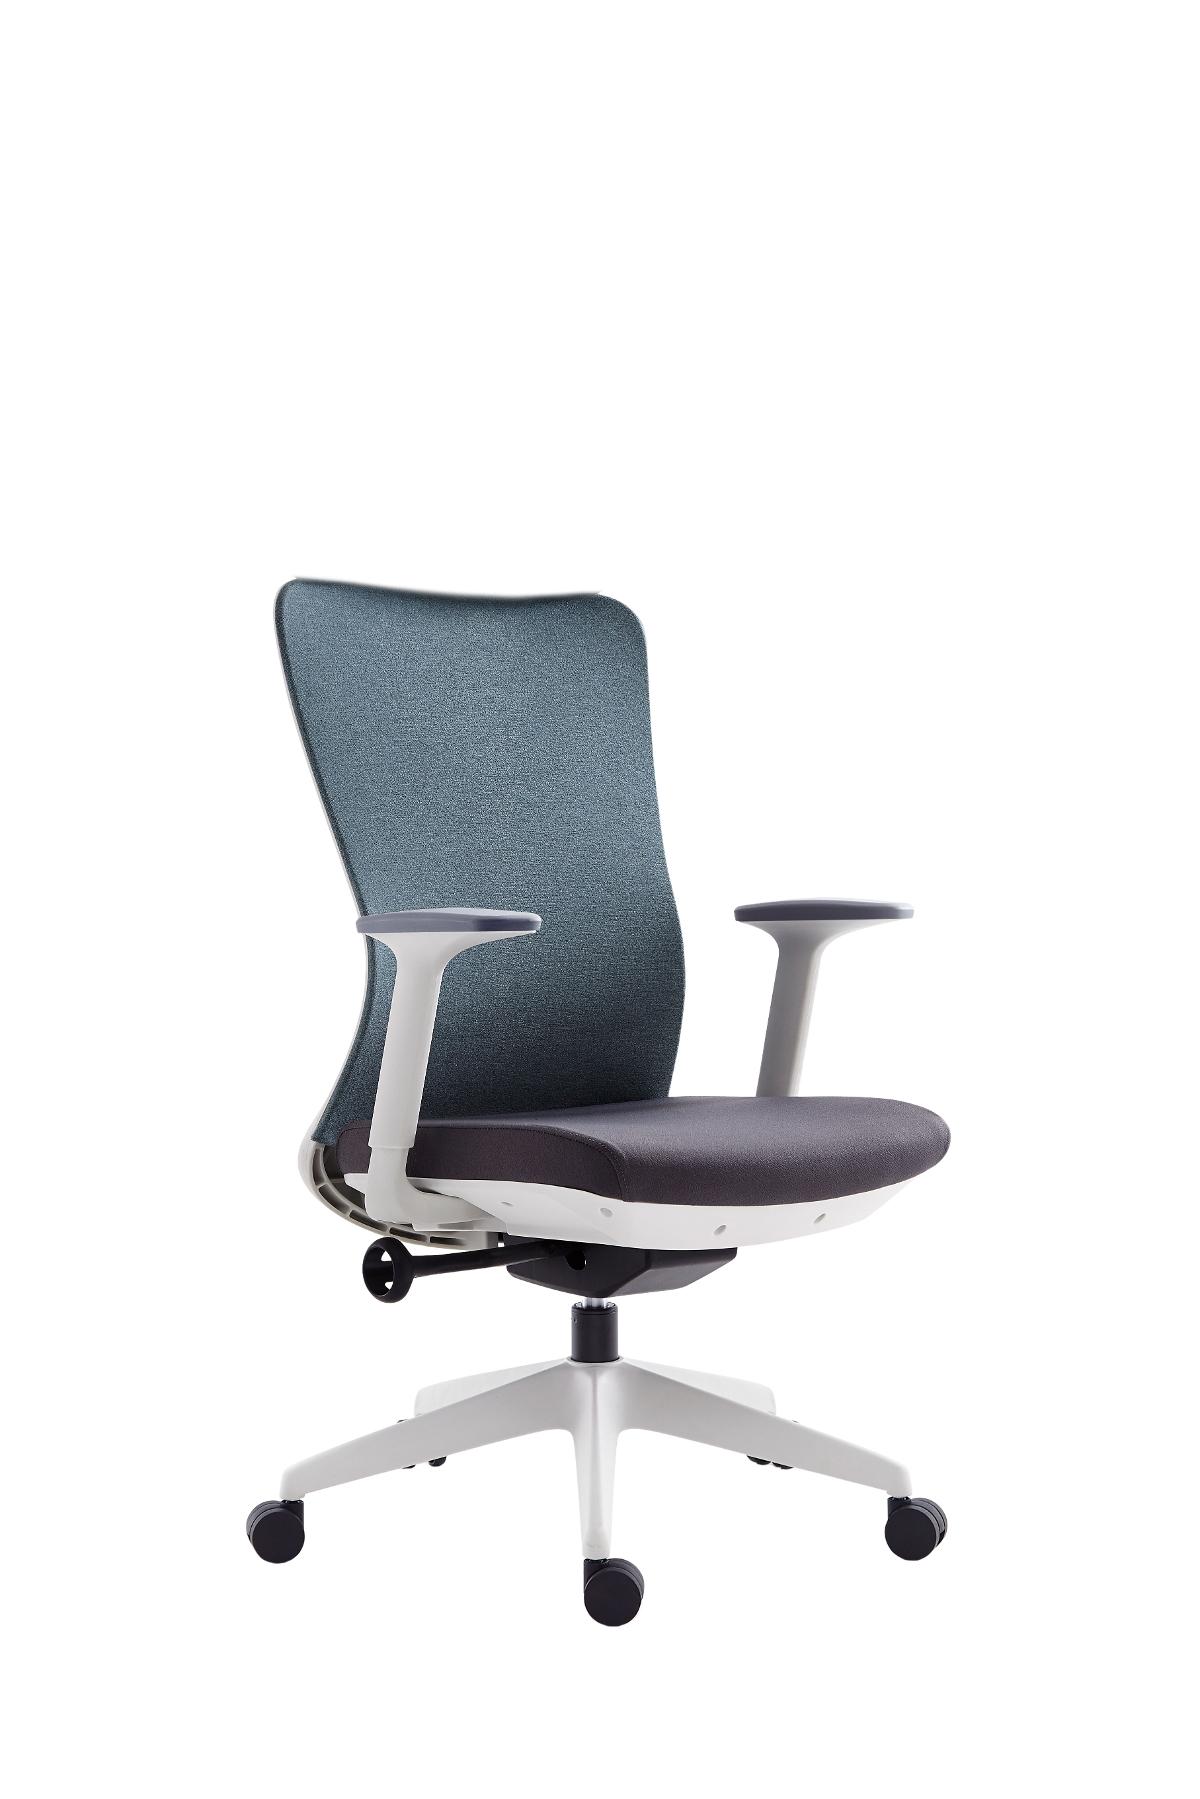 Super Chair เก้าอี้สำนักงาน รุ่น M123-2 M White